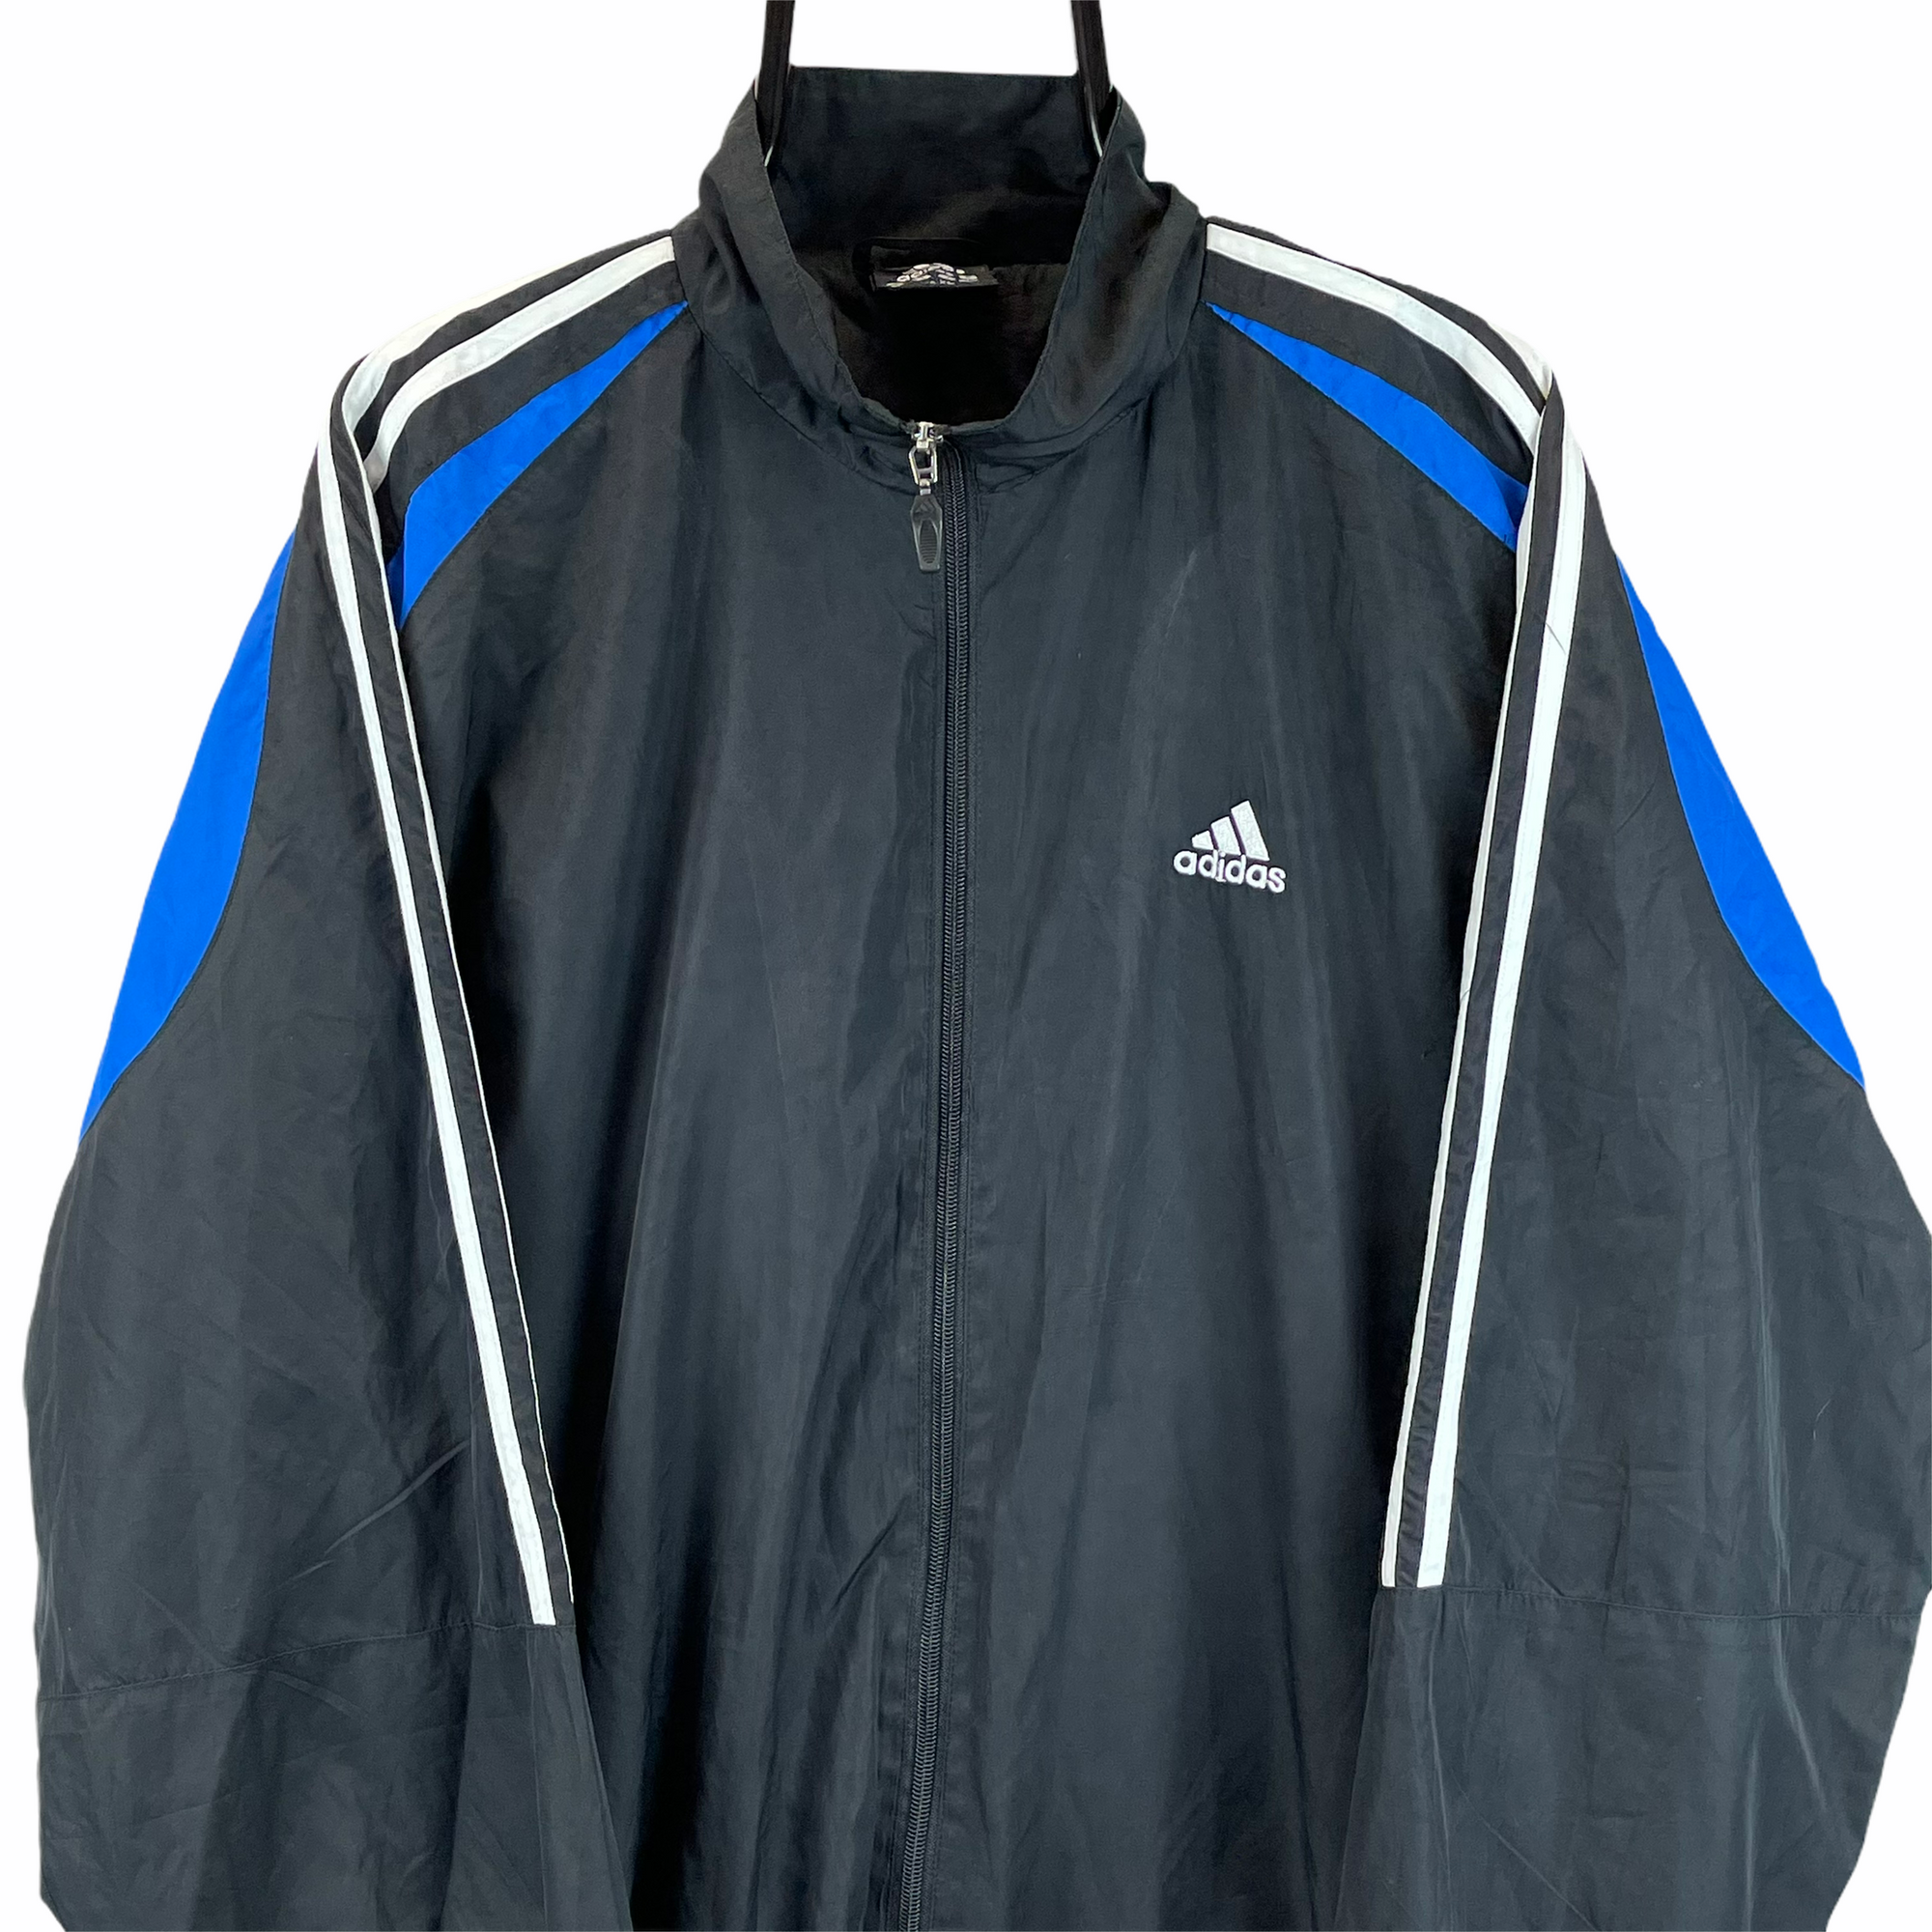 Adidas Track Jacket in Black & Blue - Men's Large/Women's XL